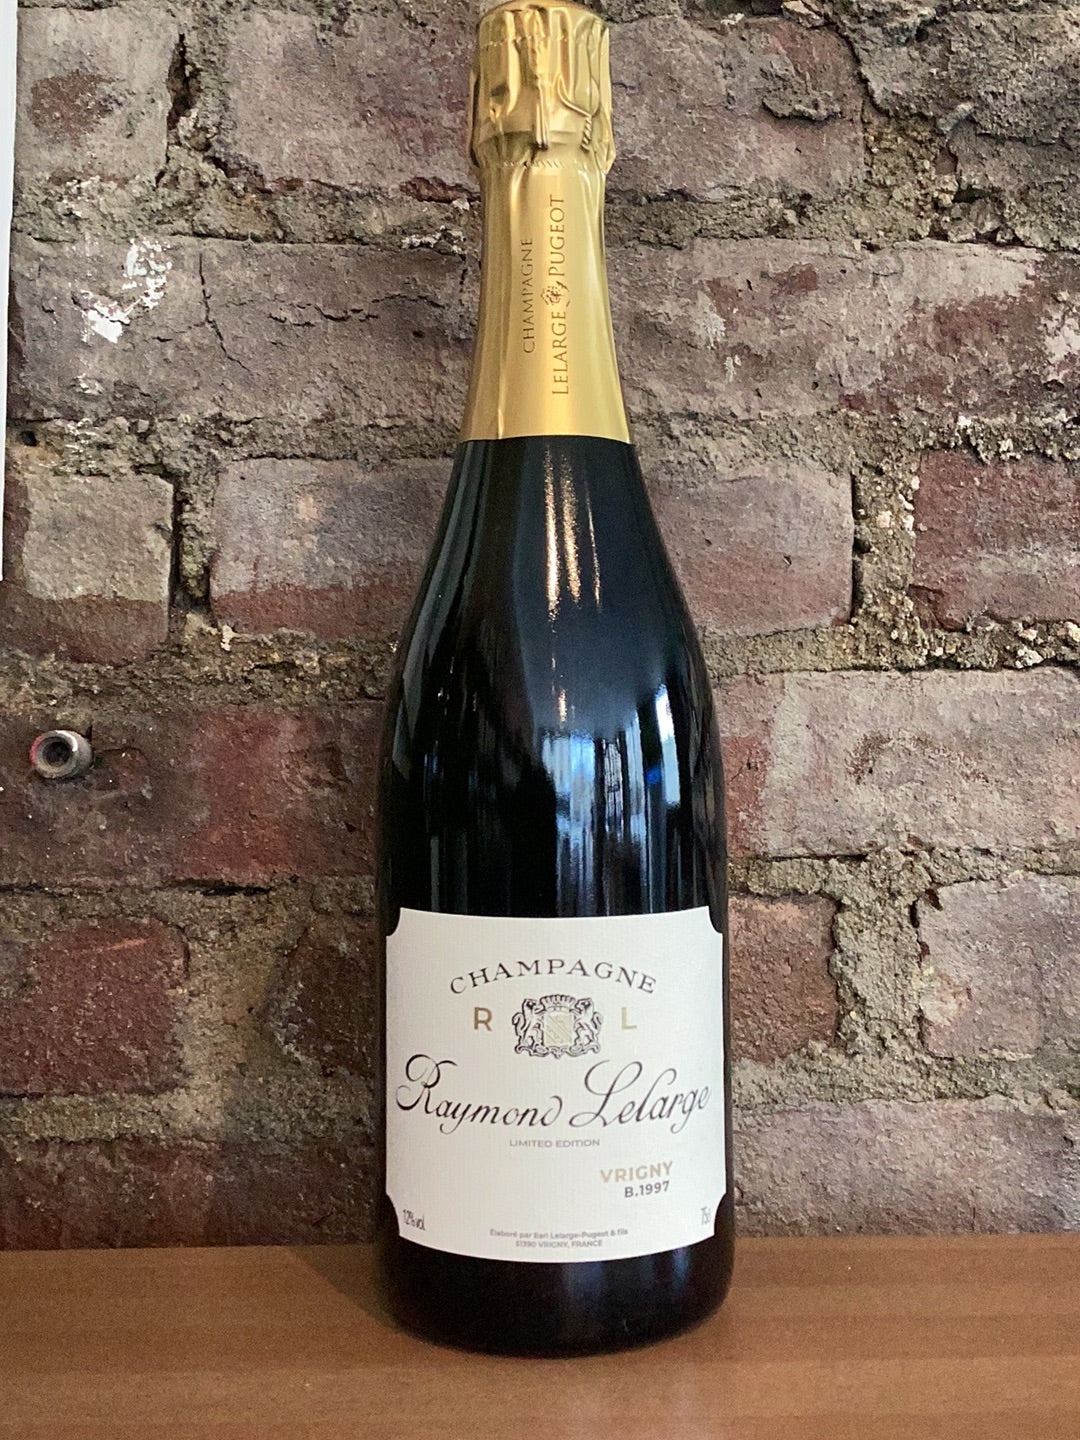 Lelarge-Pugeot, "Raymond Lelarge" Brut Premier Cru 1997 (Champagne, France) 750ml